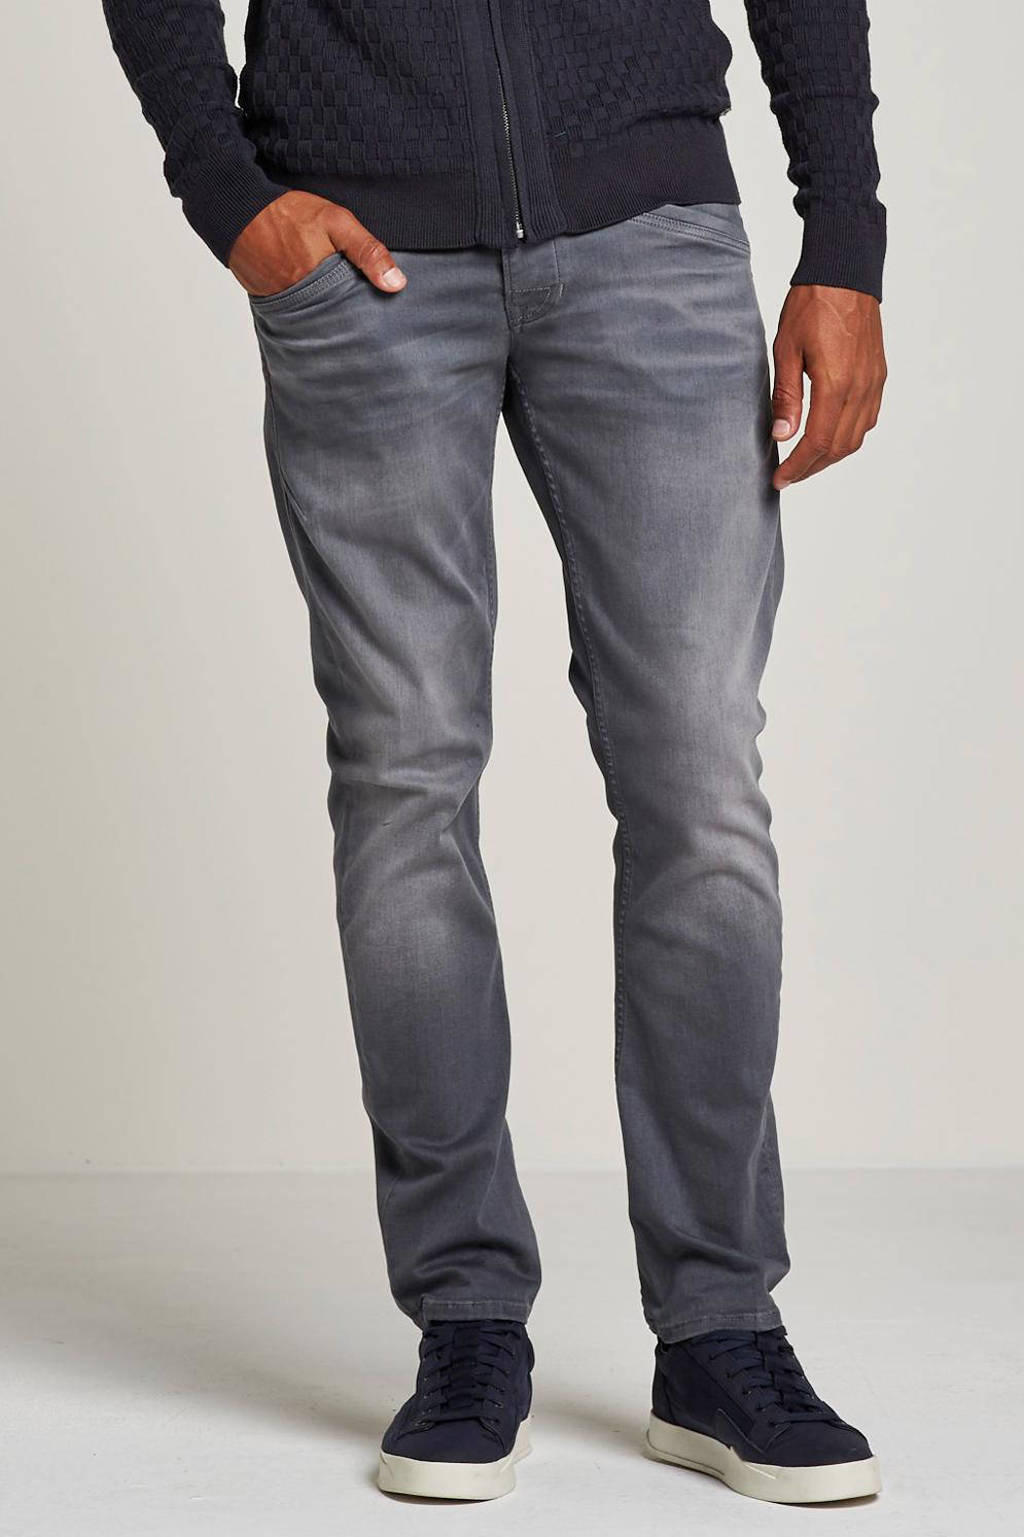 paddestoel kans Perforeren PME Legend straight fit jeans Curtis grey | wehkamp